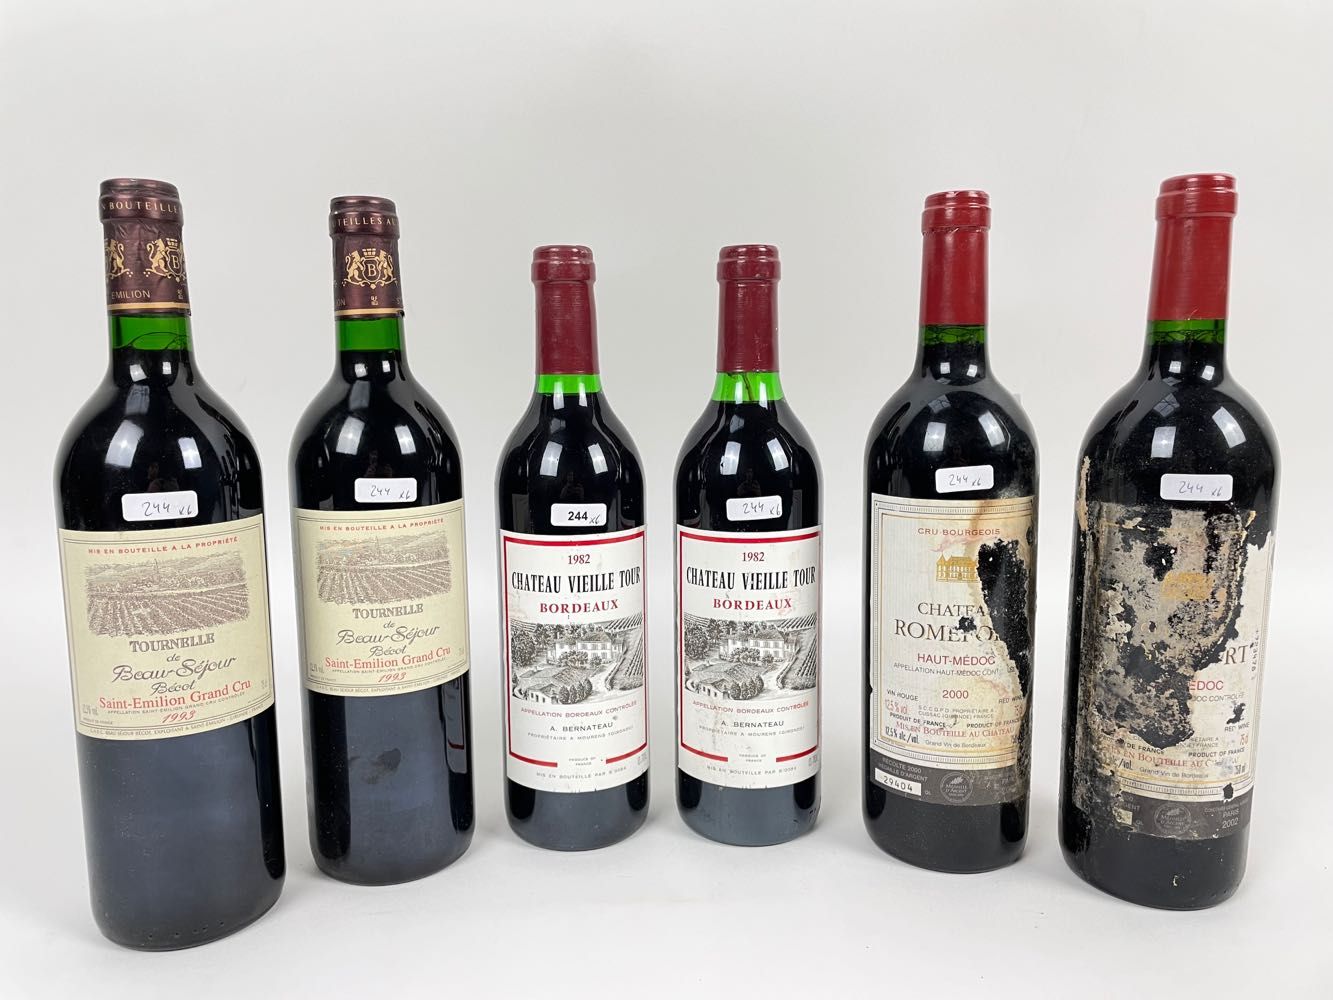 BORDEAUX Lot von sechs Flaschen (rot) :
- Château Vieille-Tour 1982, zwei Flasch&hellip;